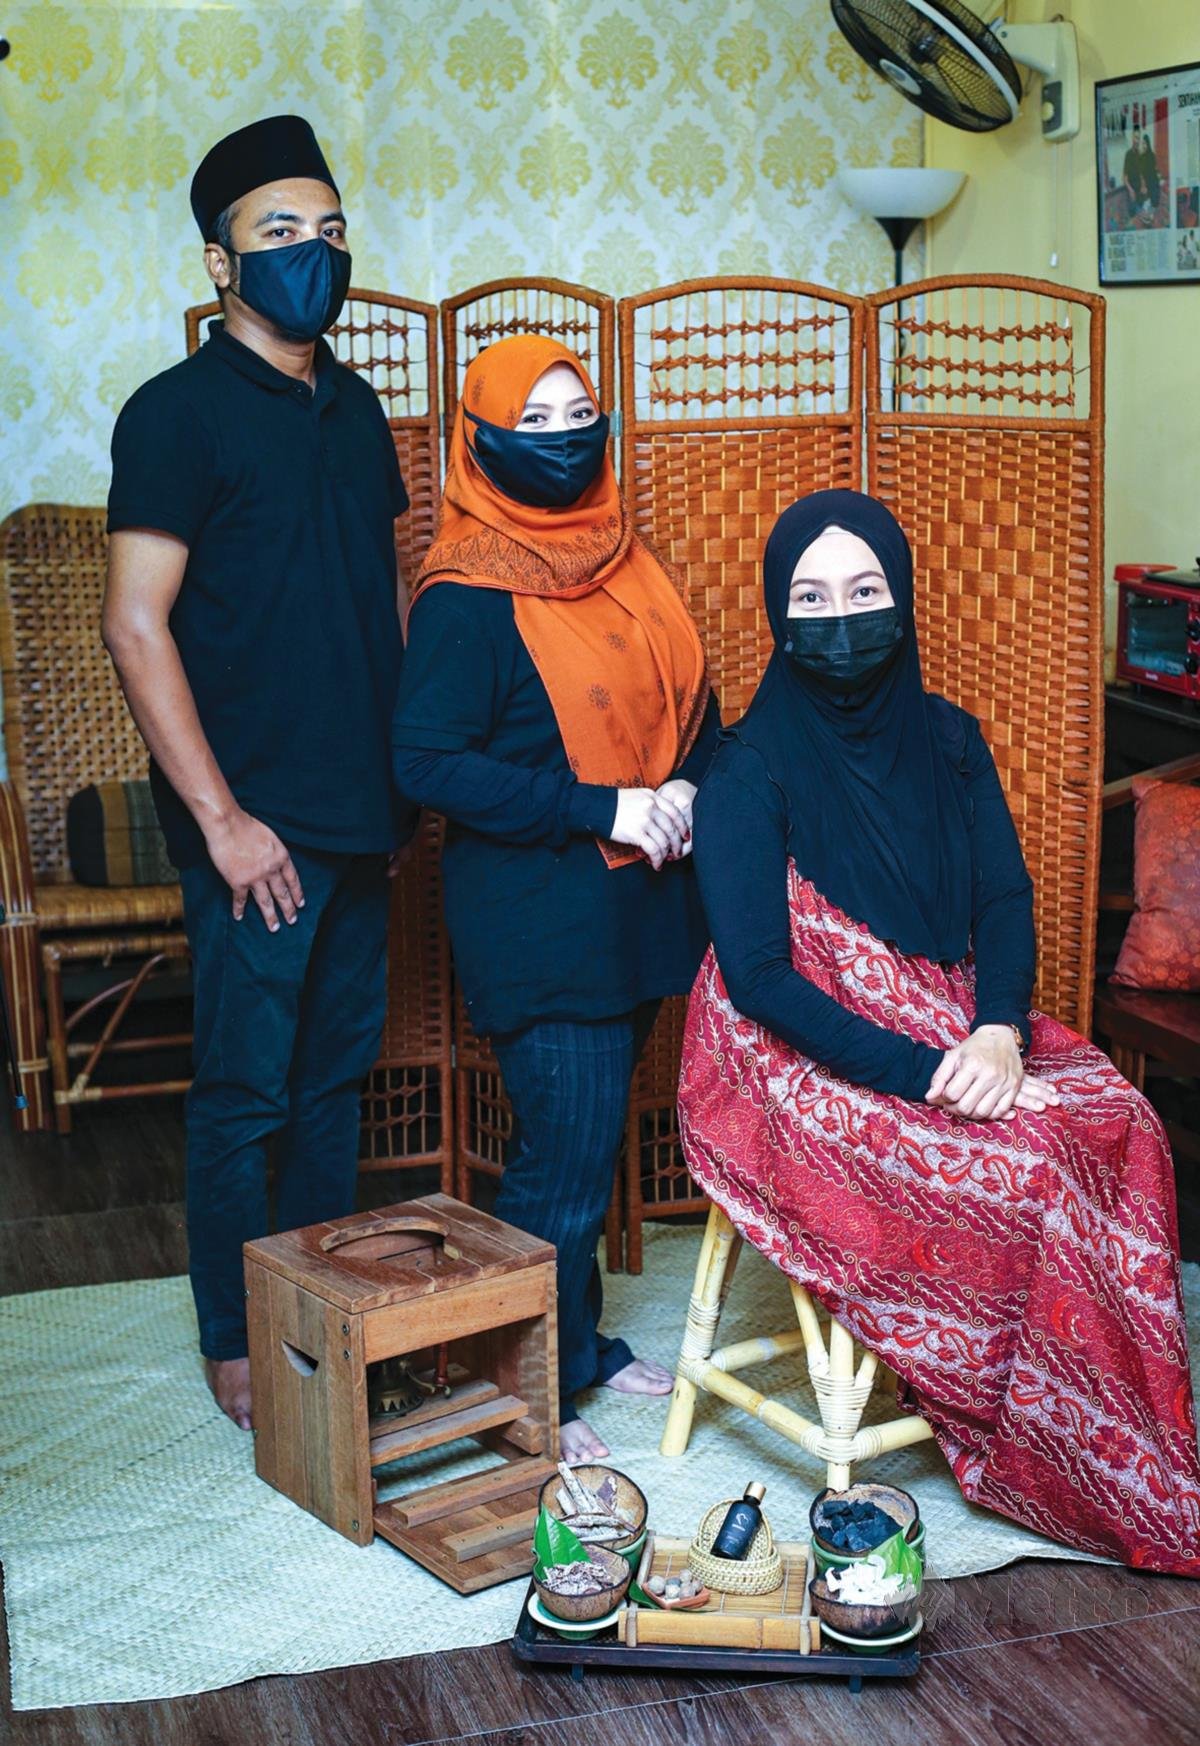 NUR Khurshiah melakukan rawatan tangas bagi wanita sementara suaminya pula membantu lelaki yang mengalami masalah angin pasang dengan tangas.